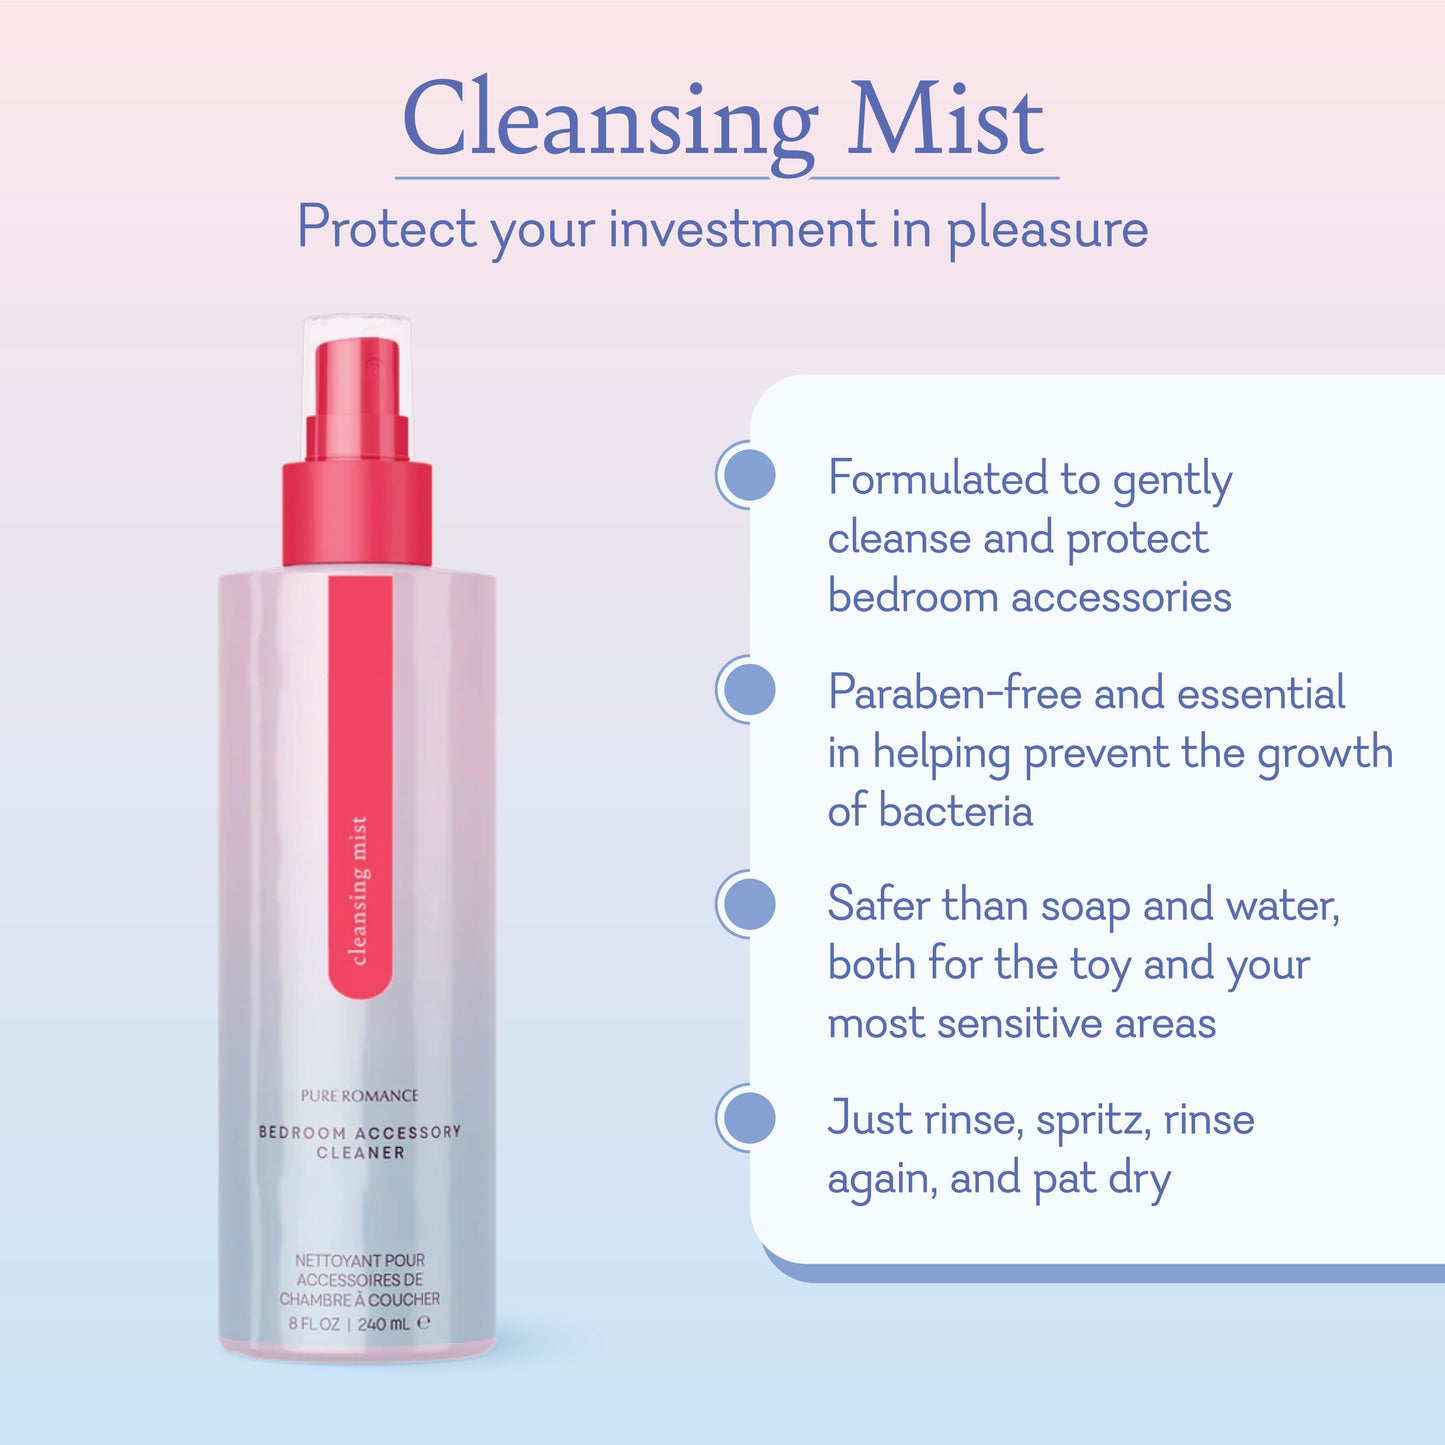 Cleansing Mist